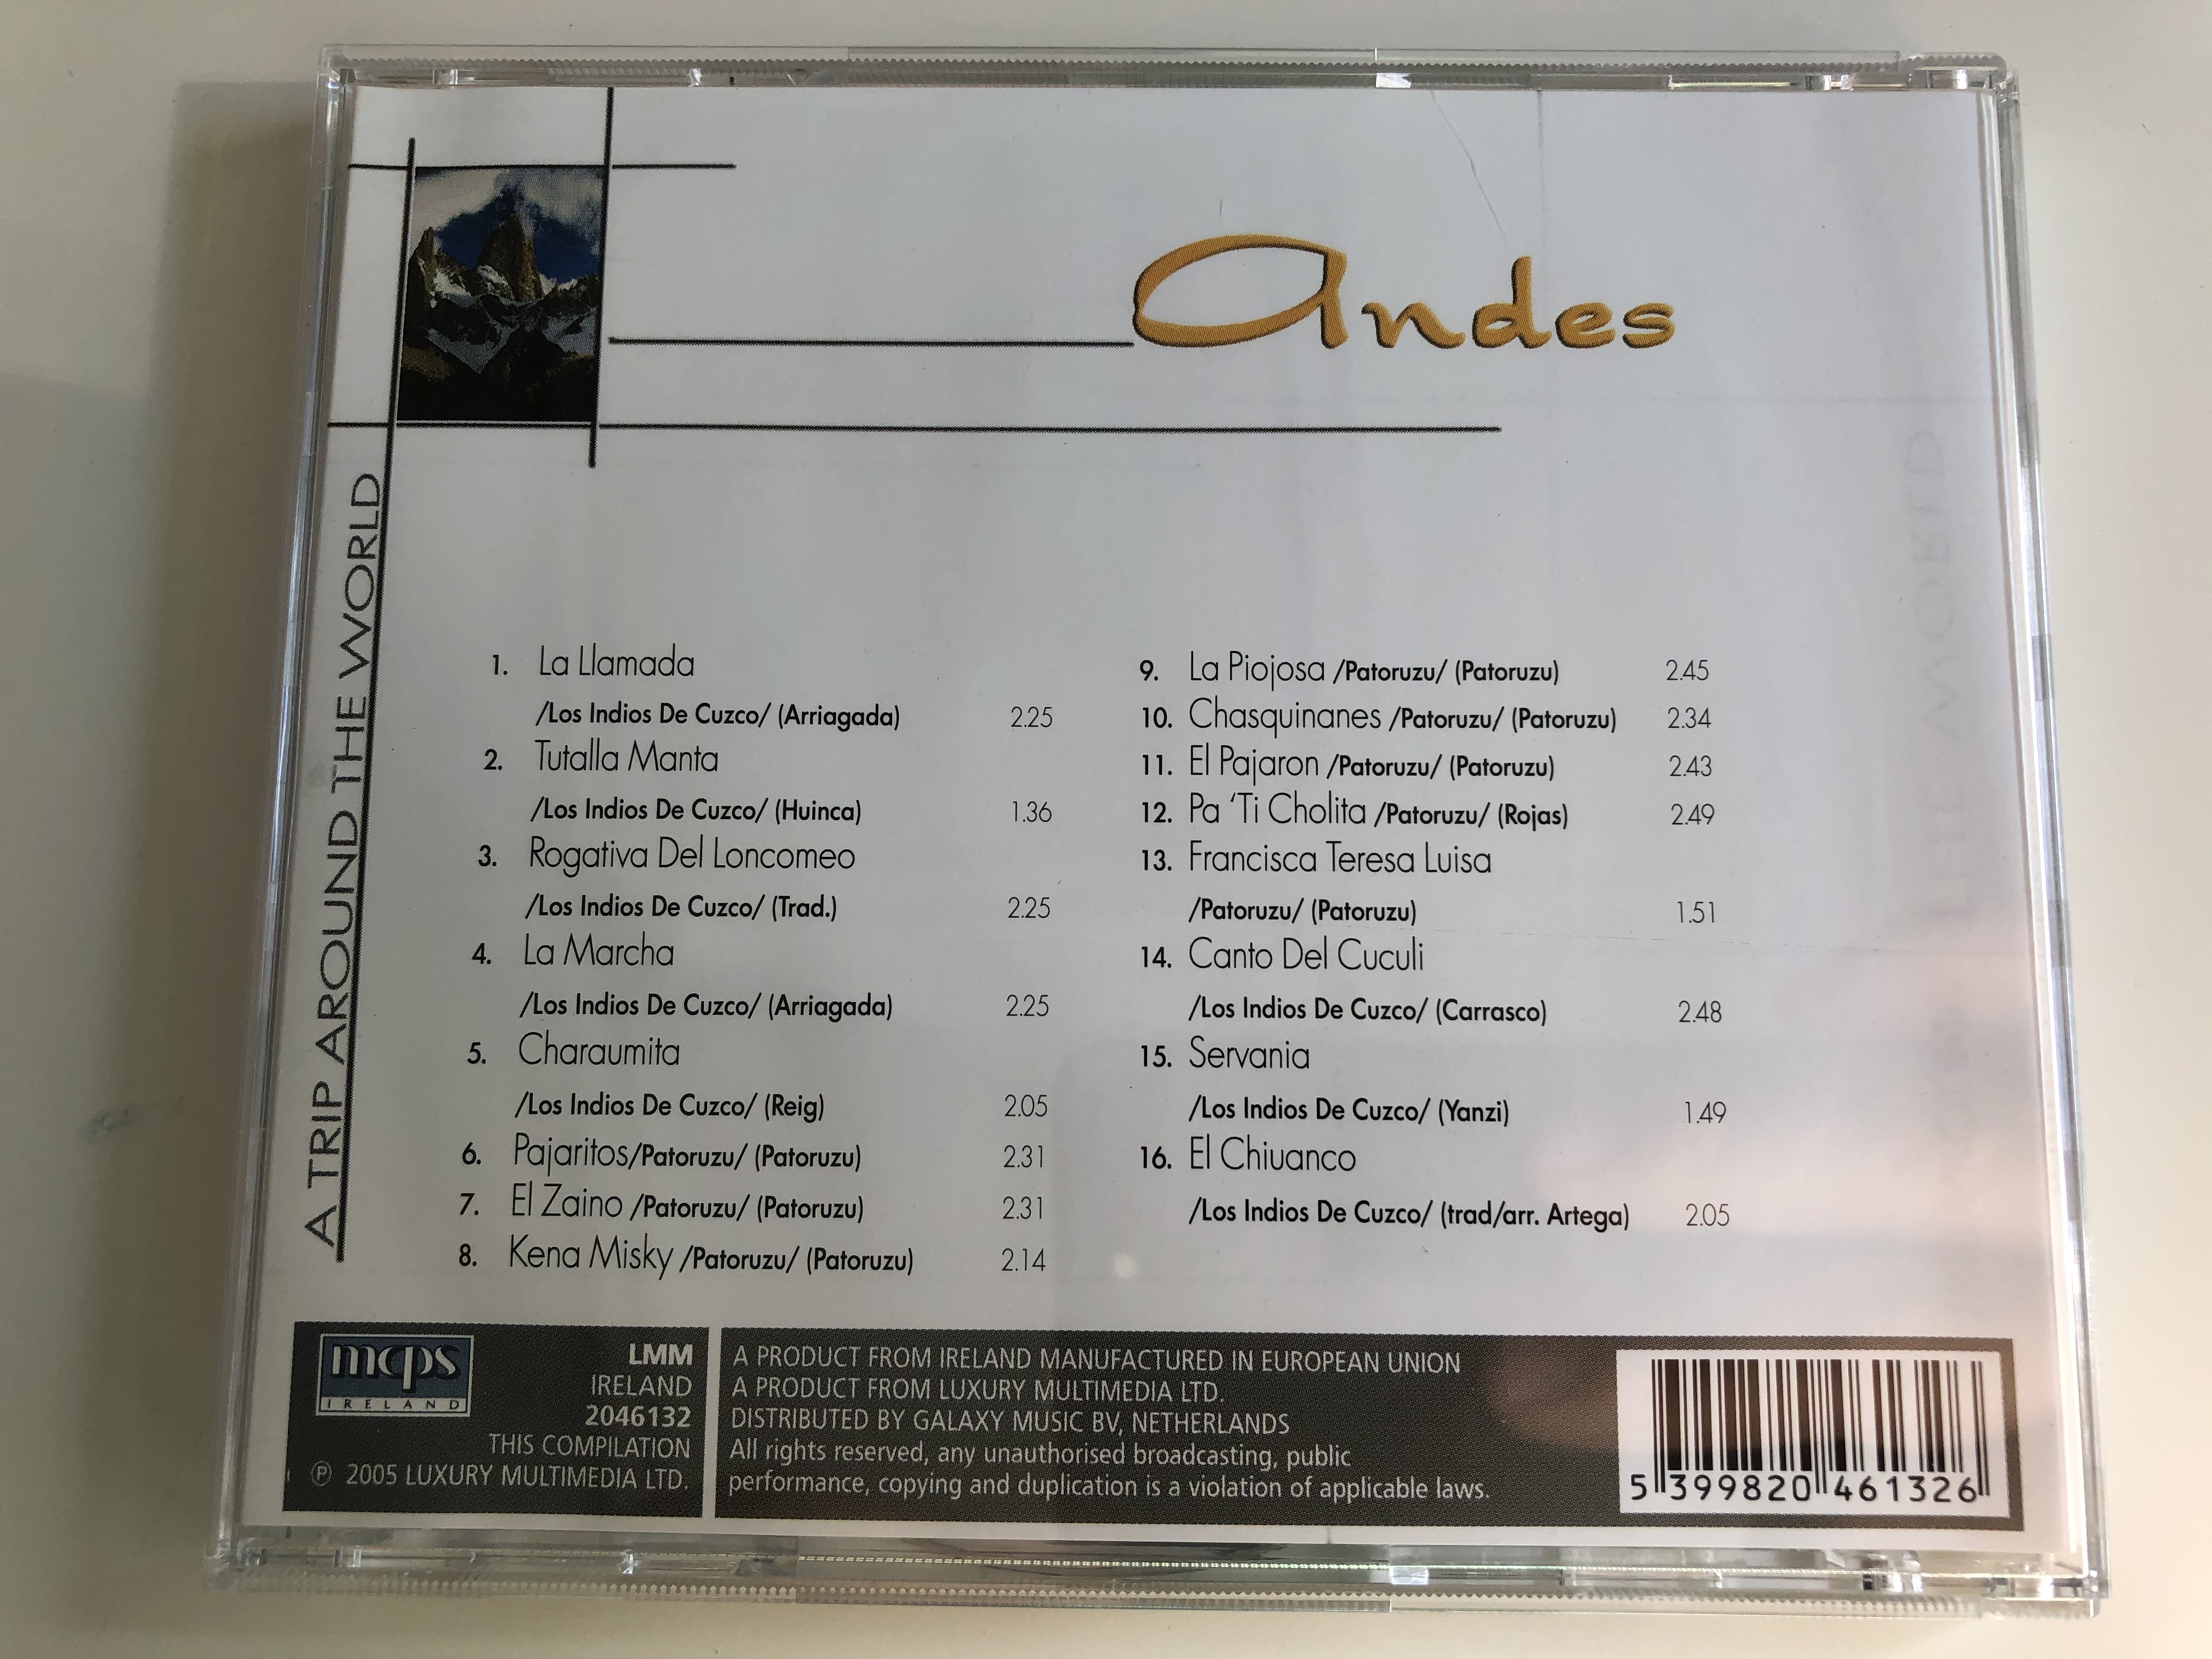 andes-a-trip-around-the-world-lmm-audio-cd-2005-2046132-4-.jpg